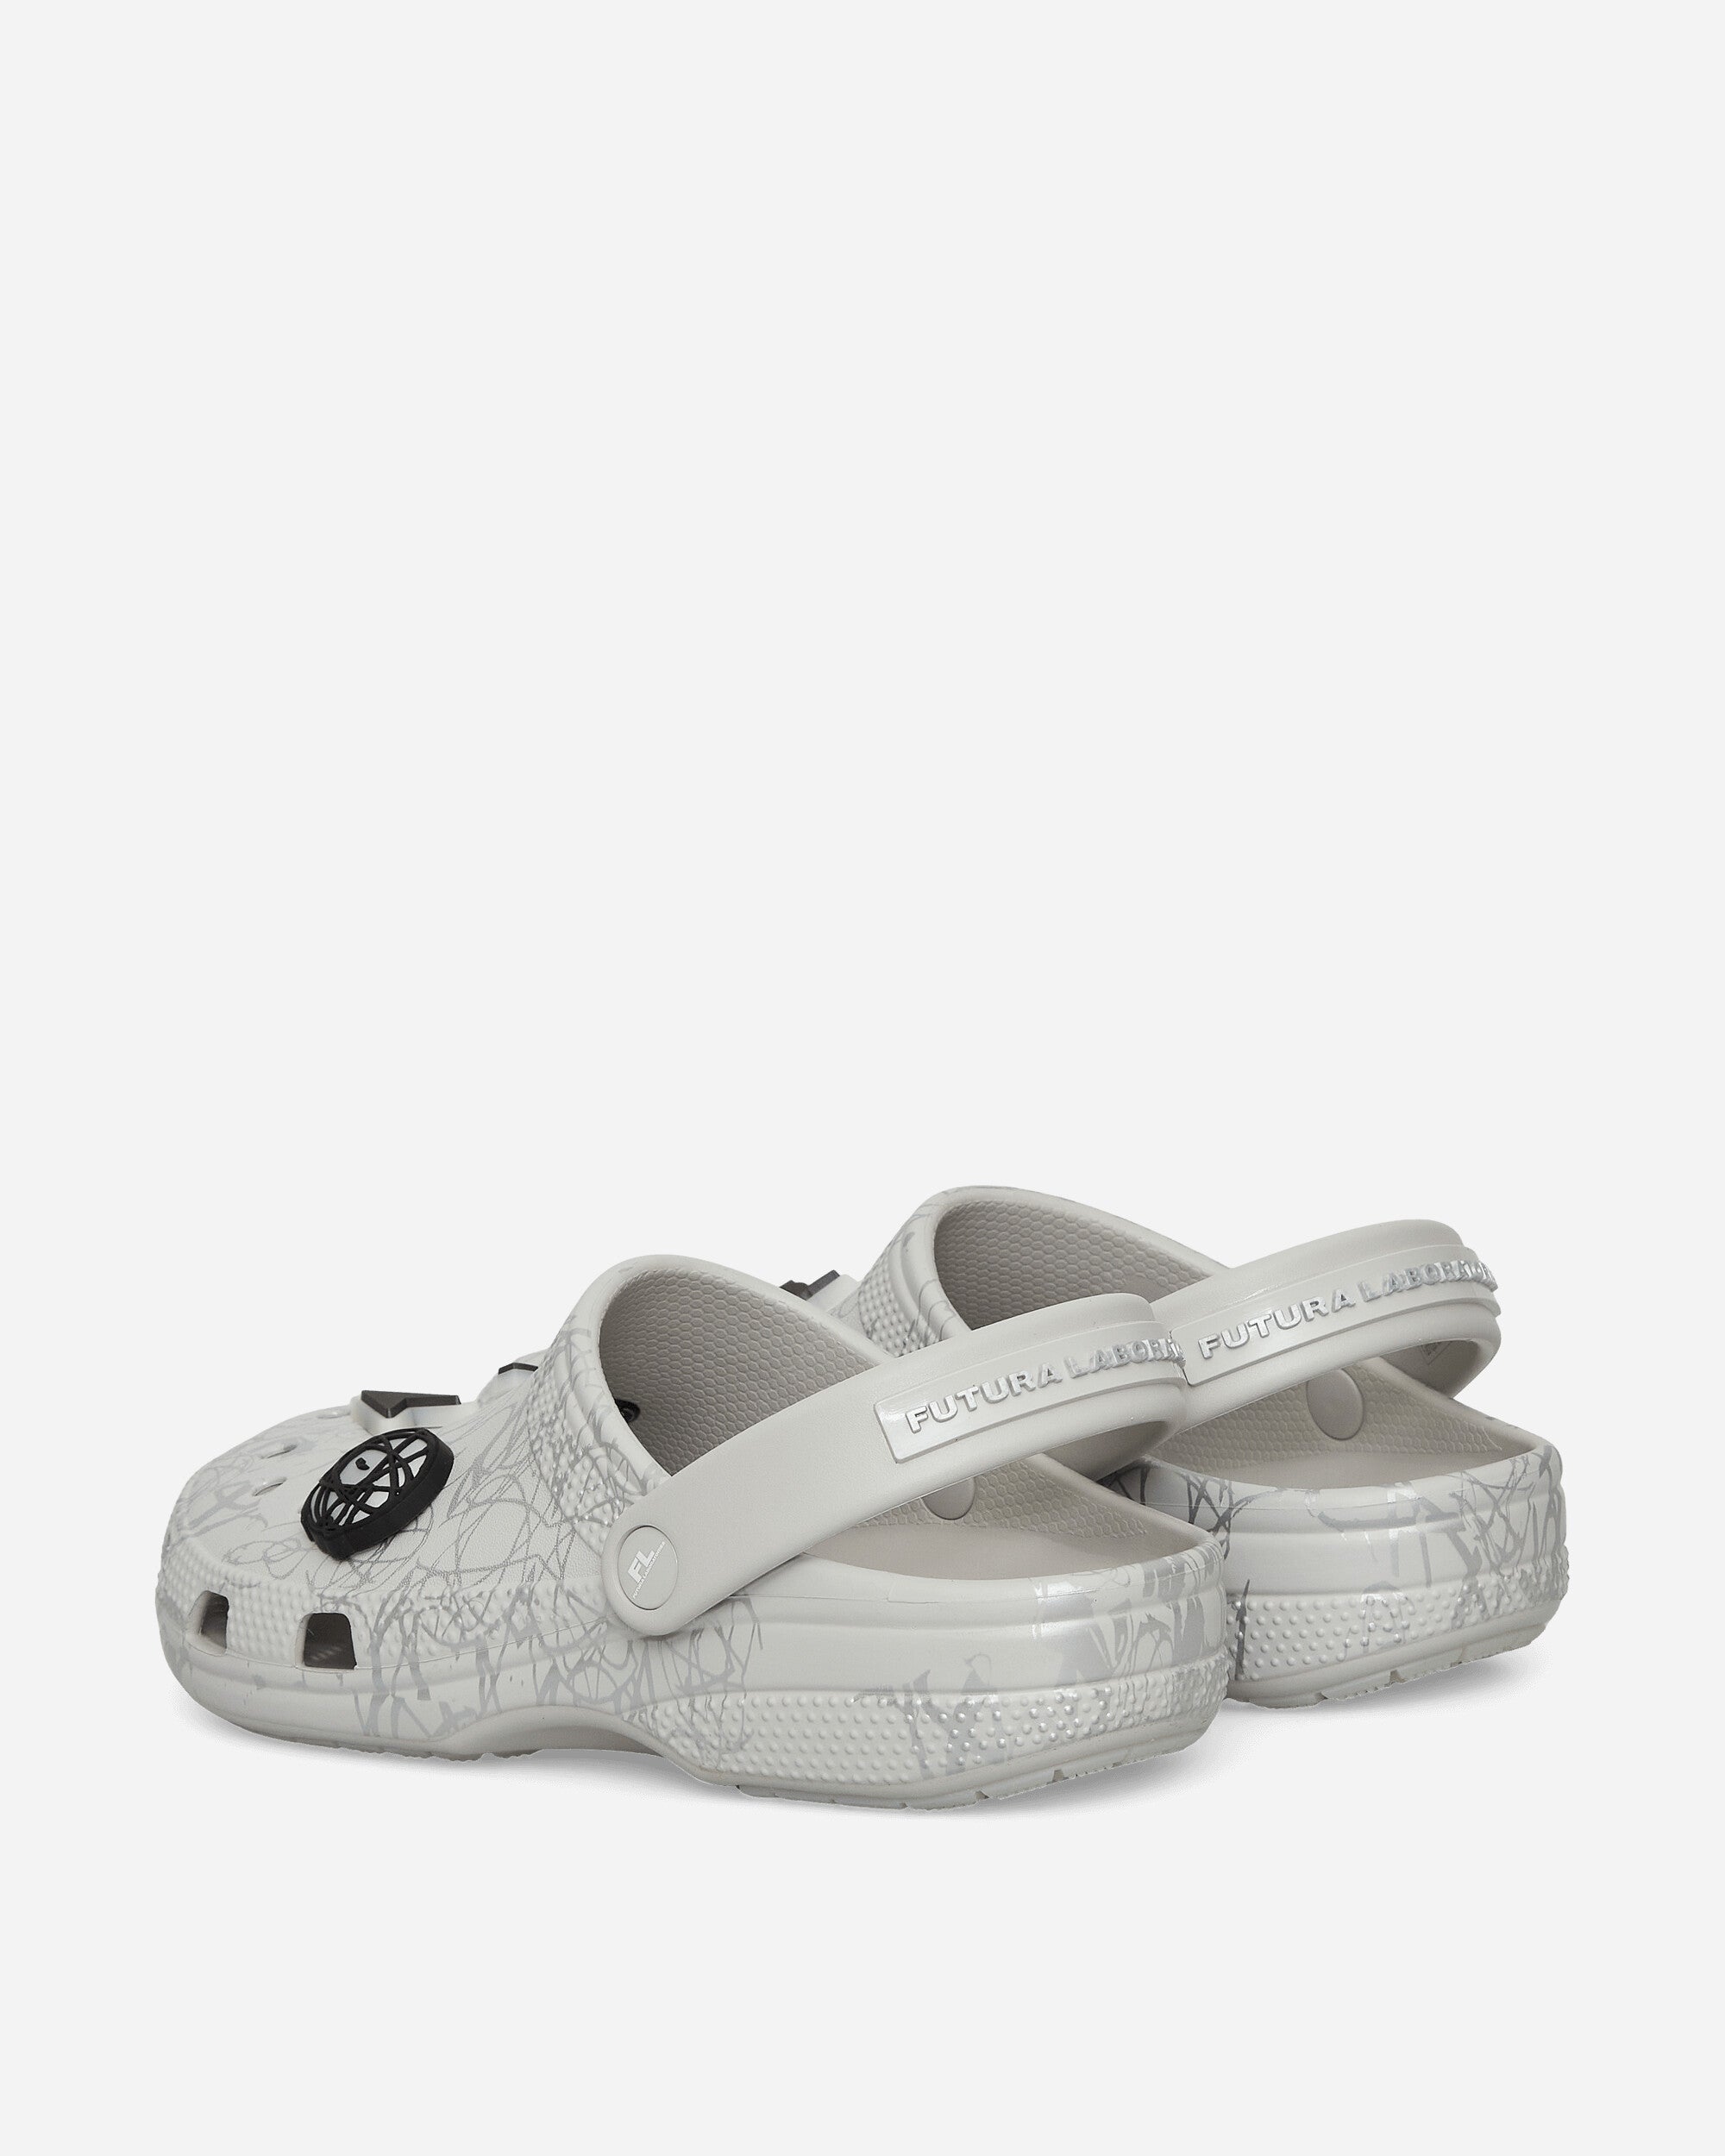 Crocs Fl X Crocs Classic Ro Clog Pearl White Sandals and Slides Sandals and Mules 209622 101